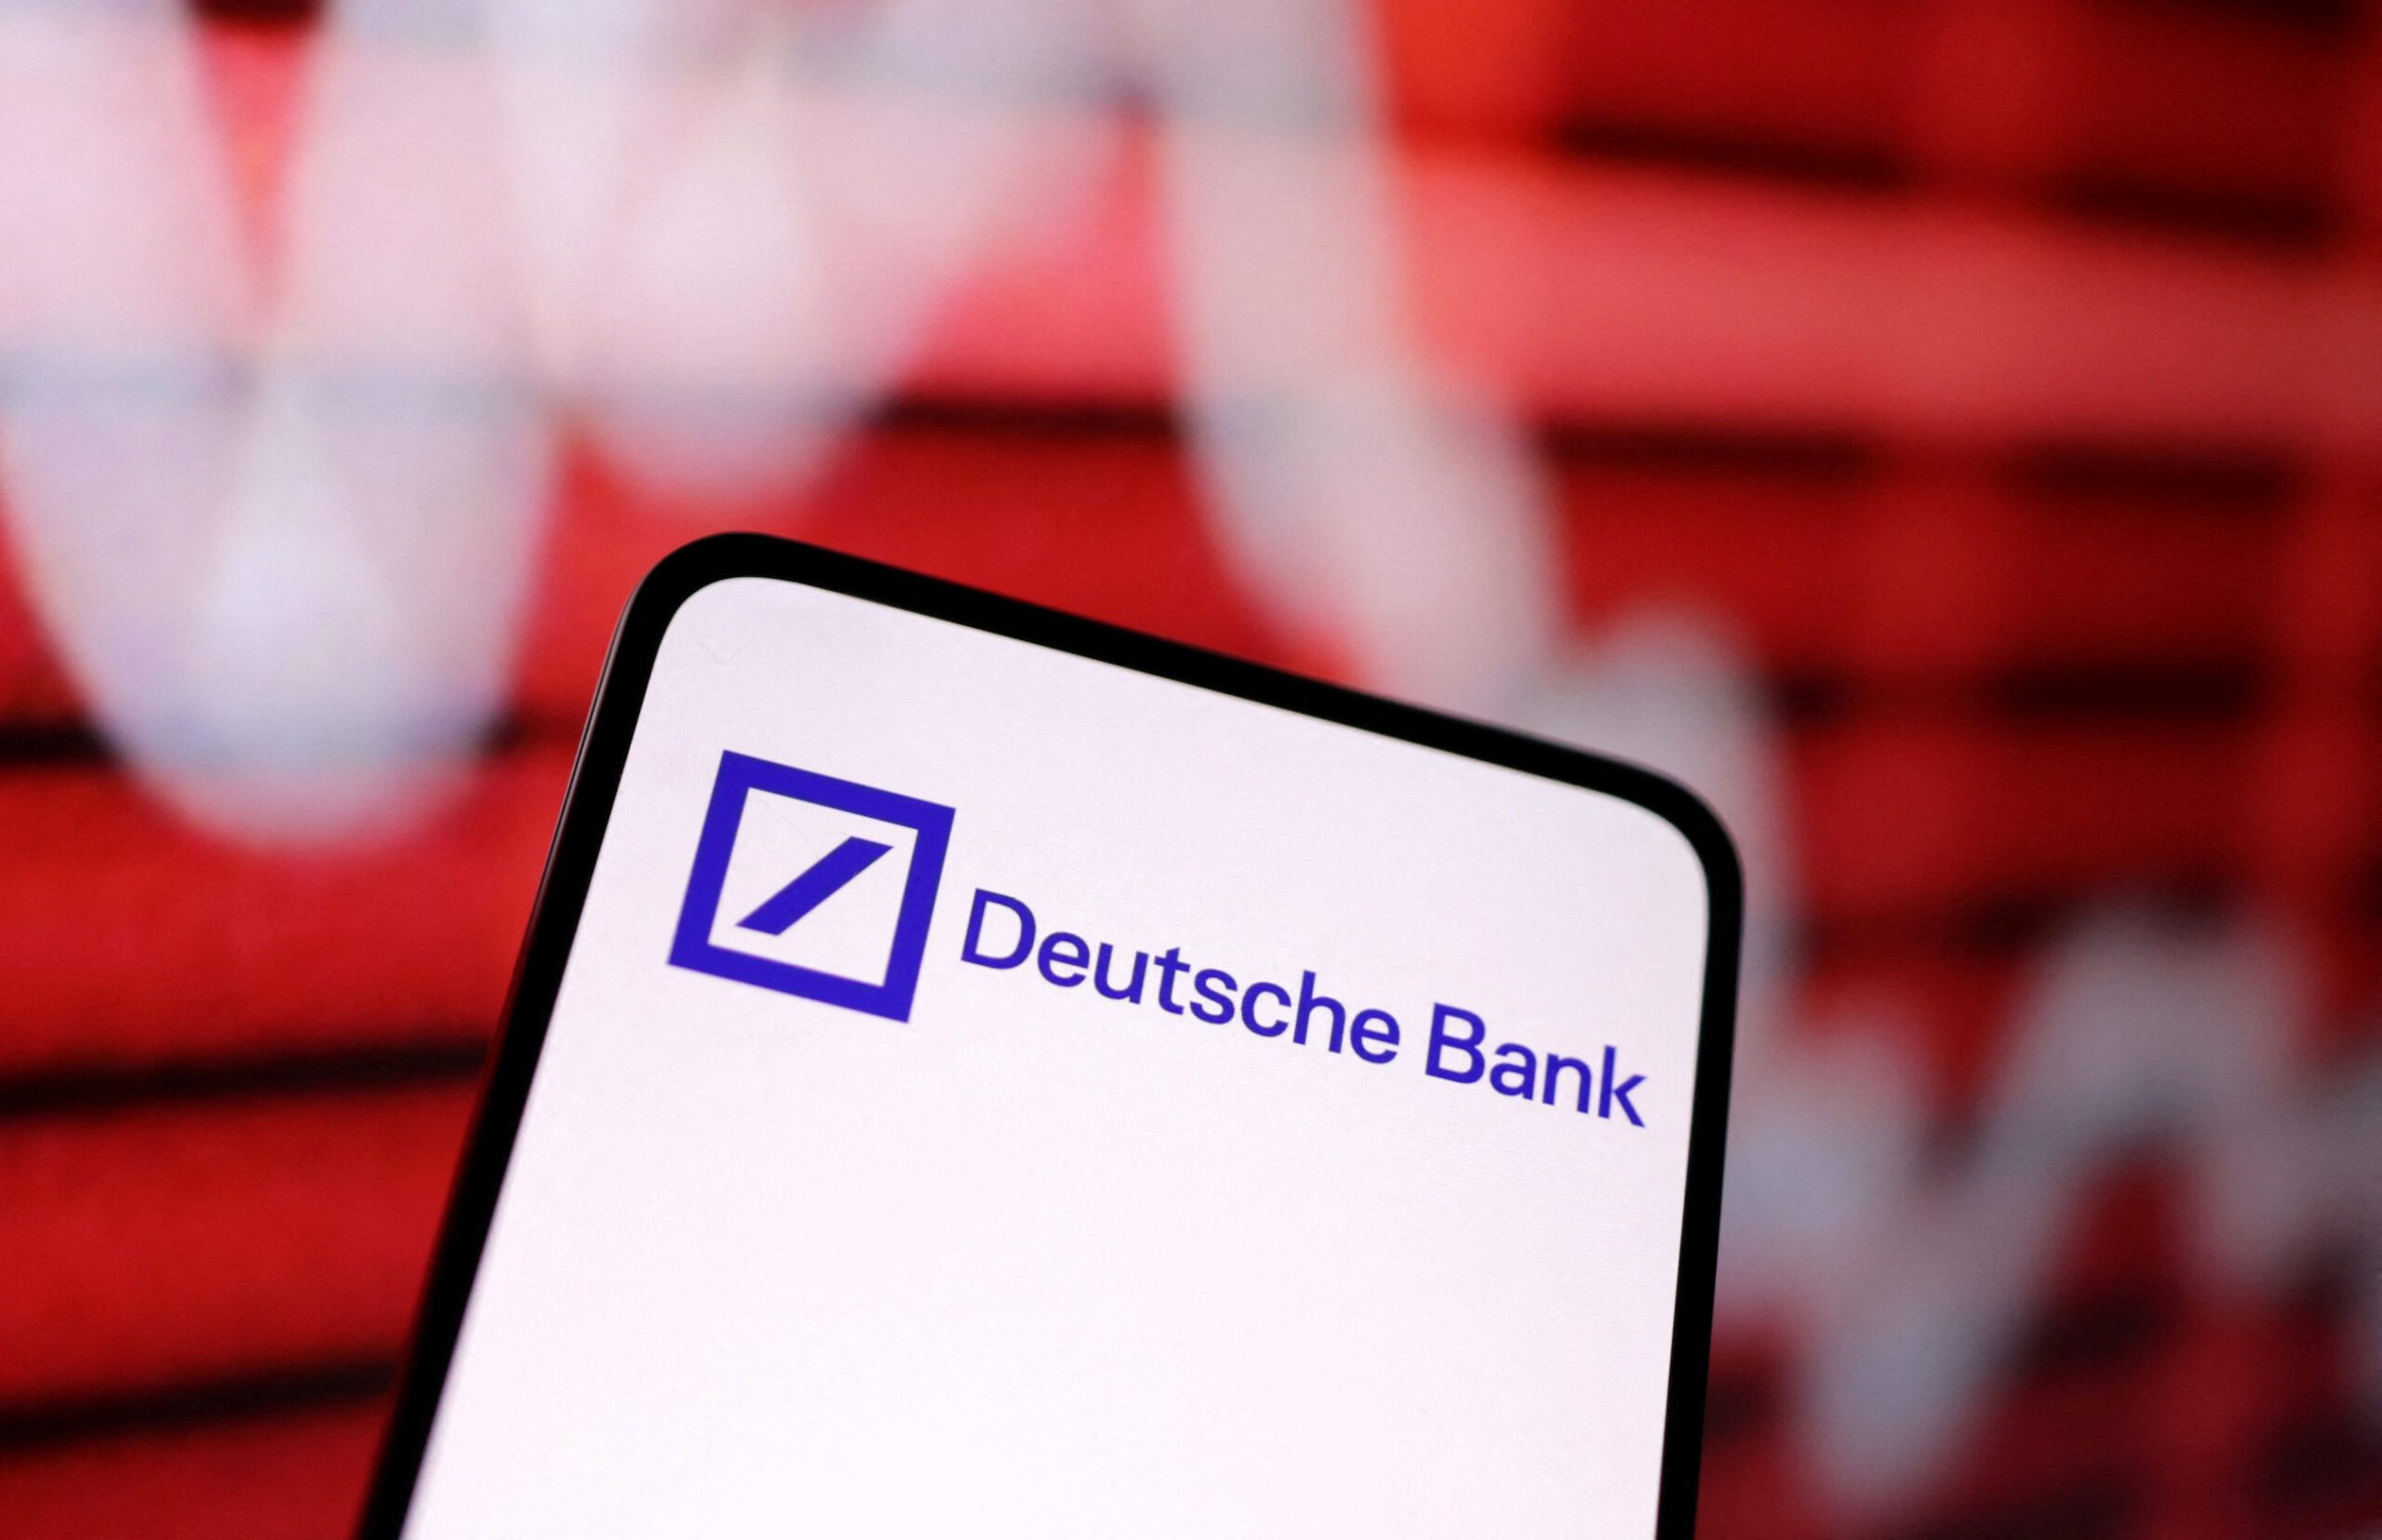 Deutsche Bank tumbles as jittery investors seek safer shores